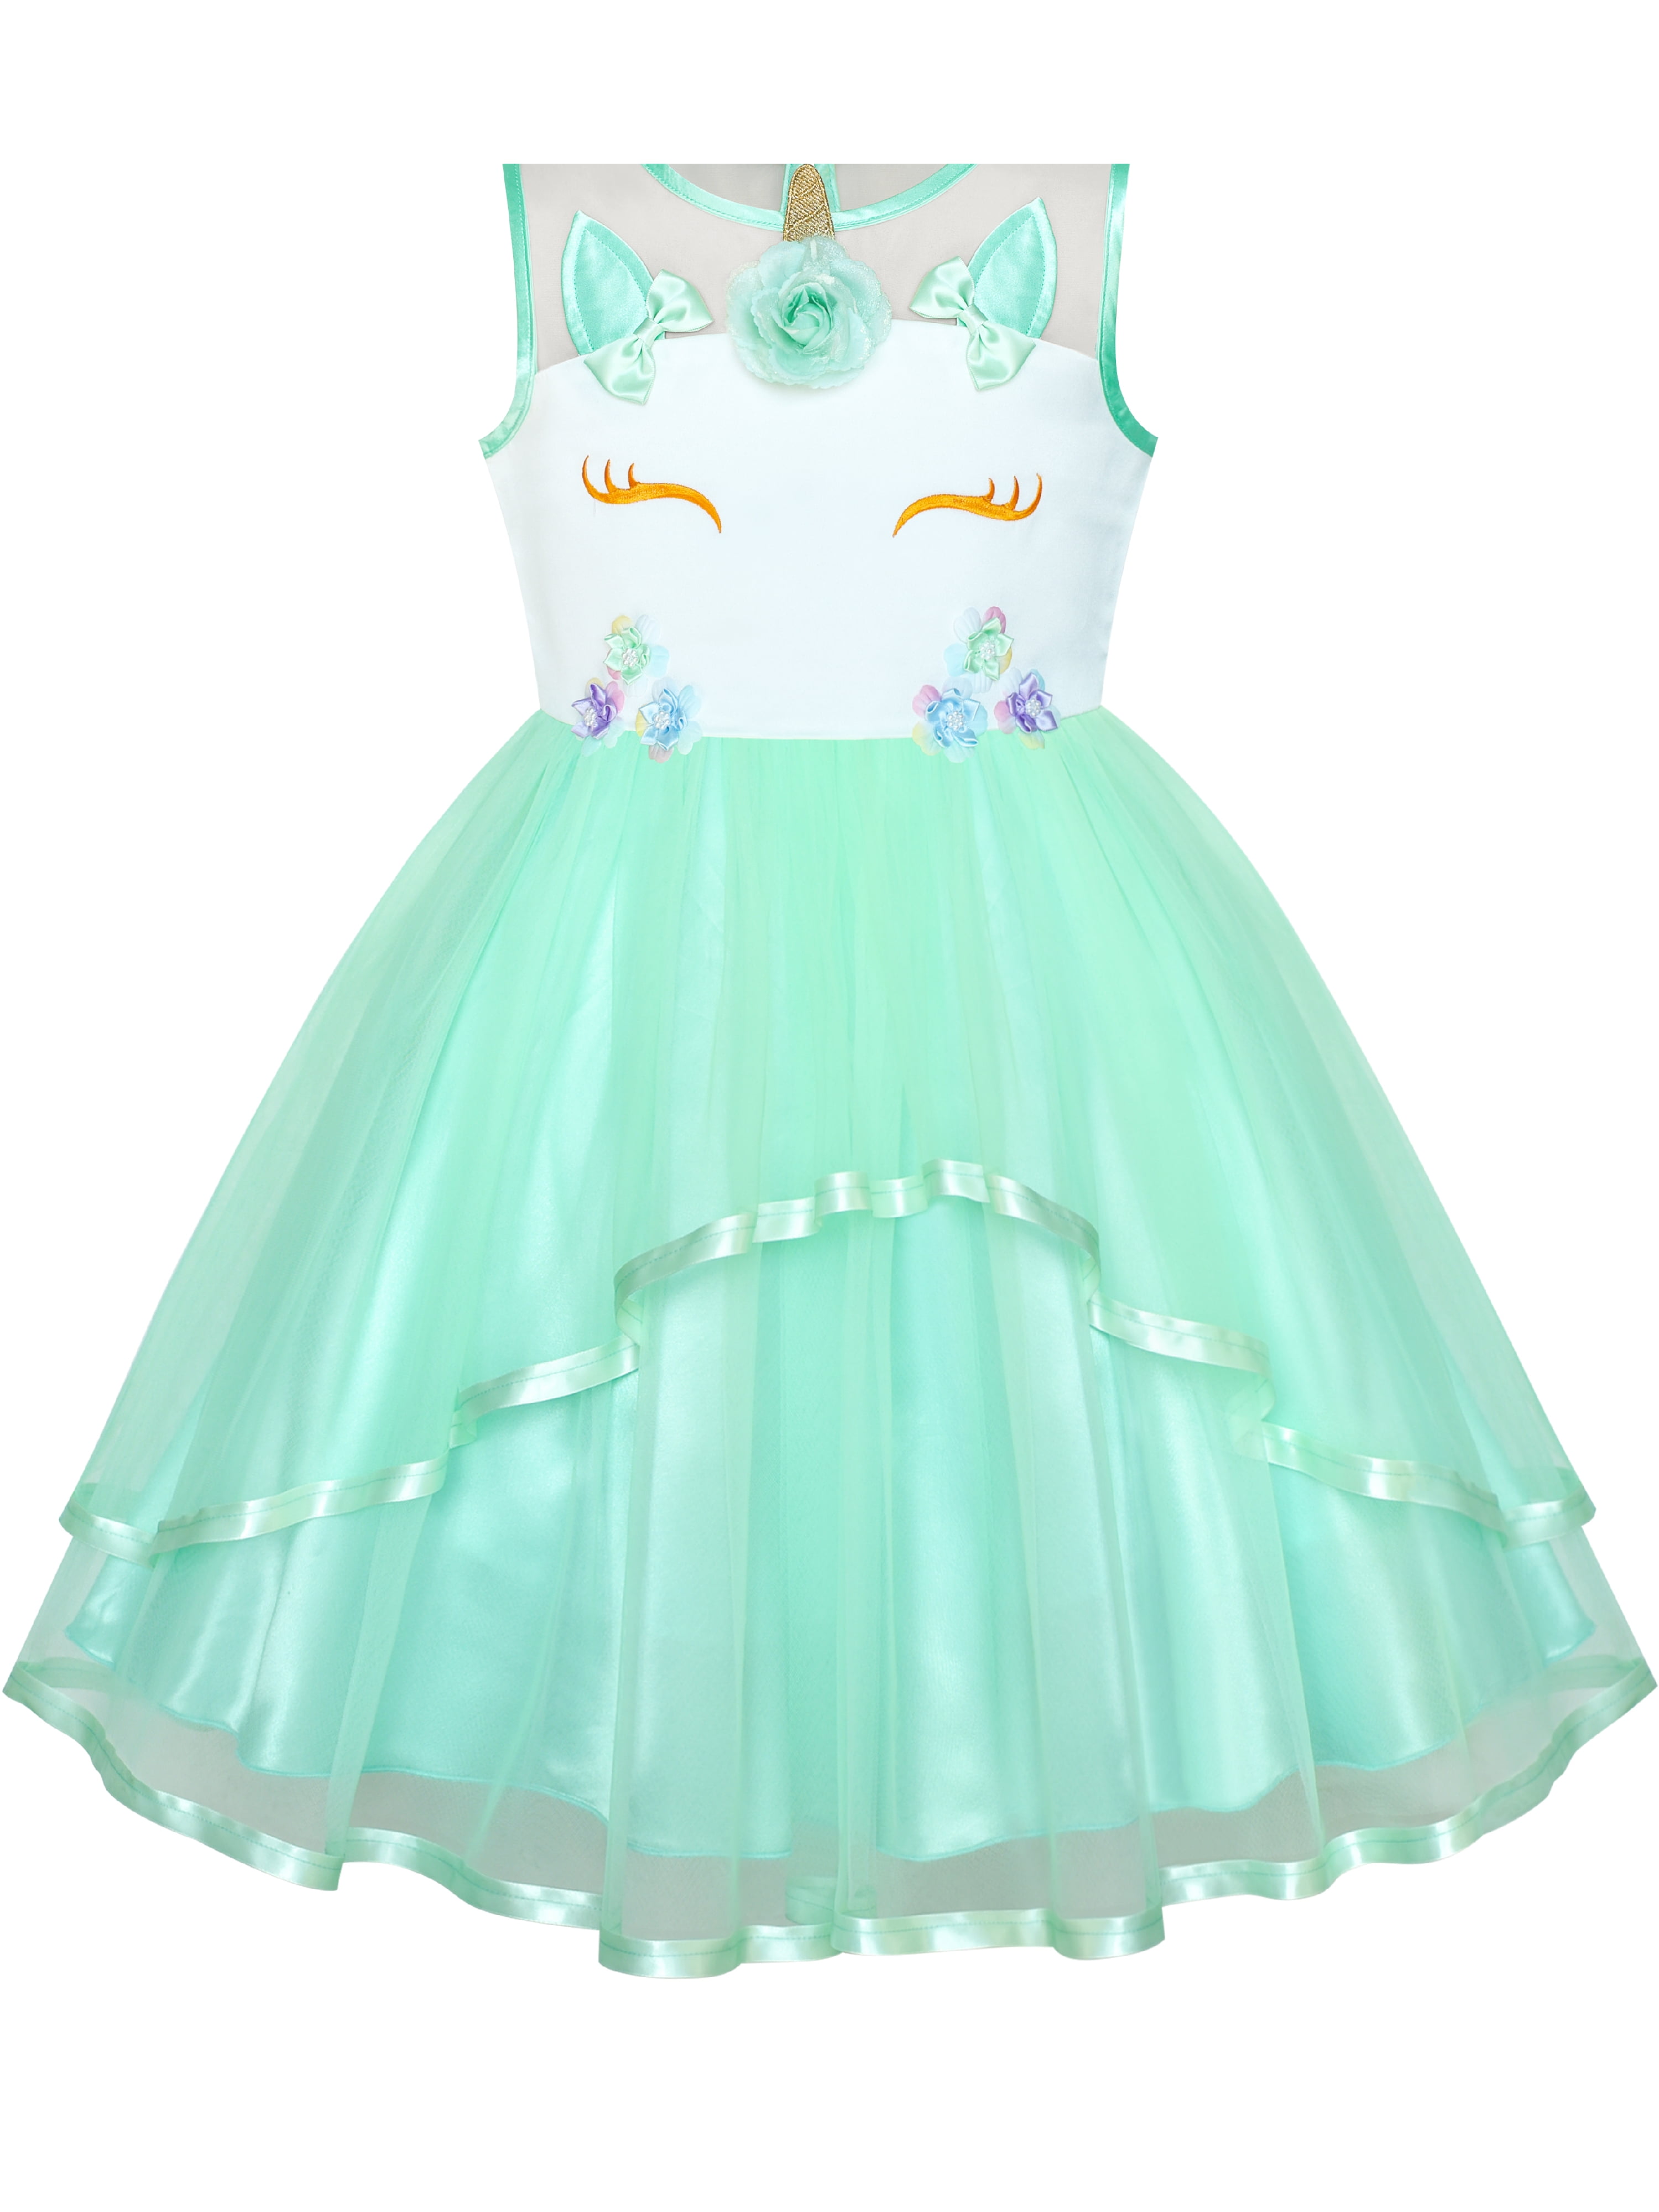 TTYAOVO Baby Girls Unicorn Costume Halloween Birthday Party Princess Dress 